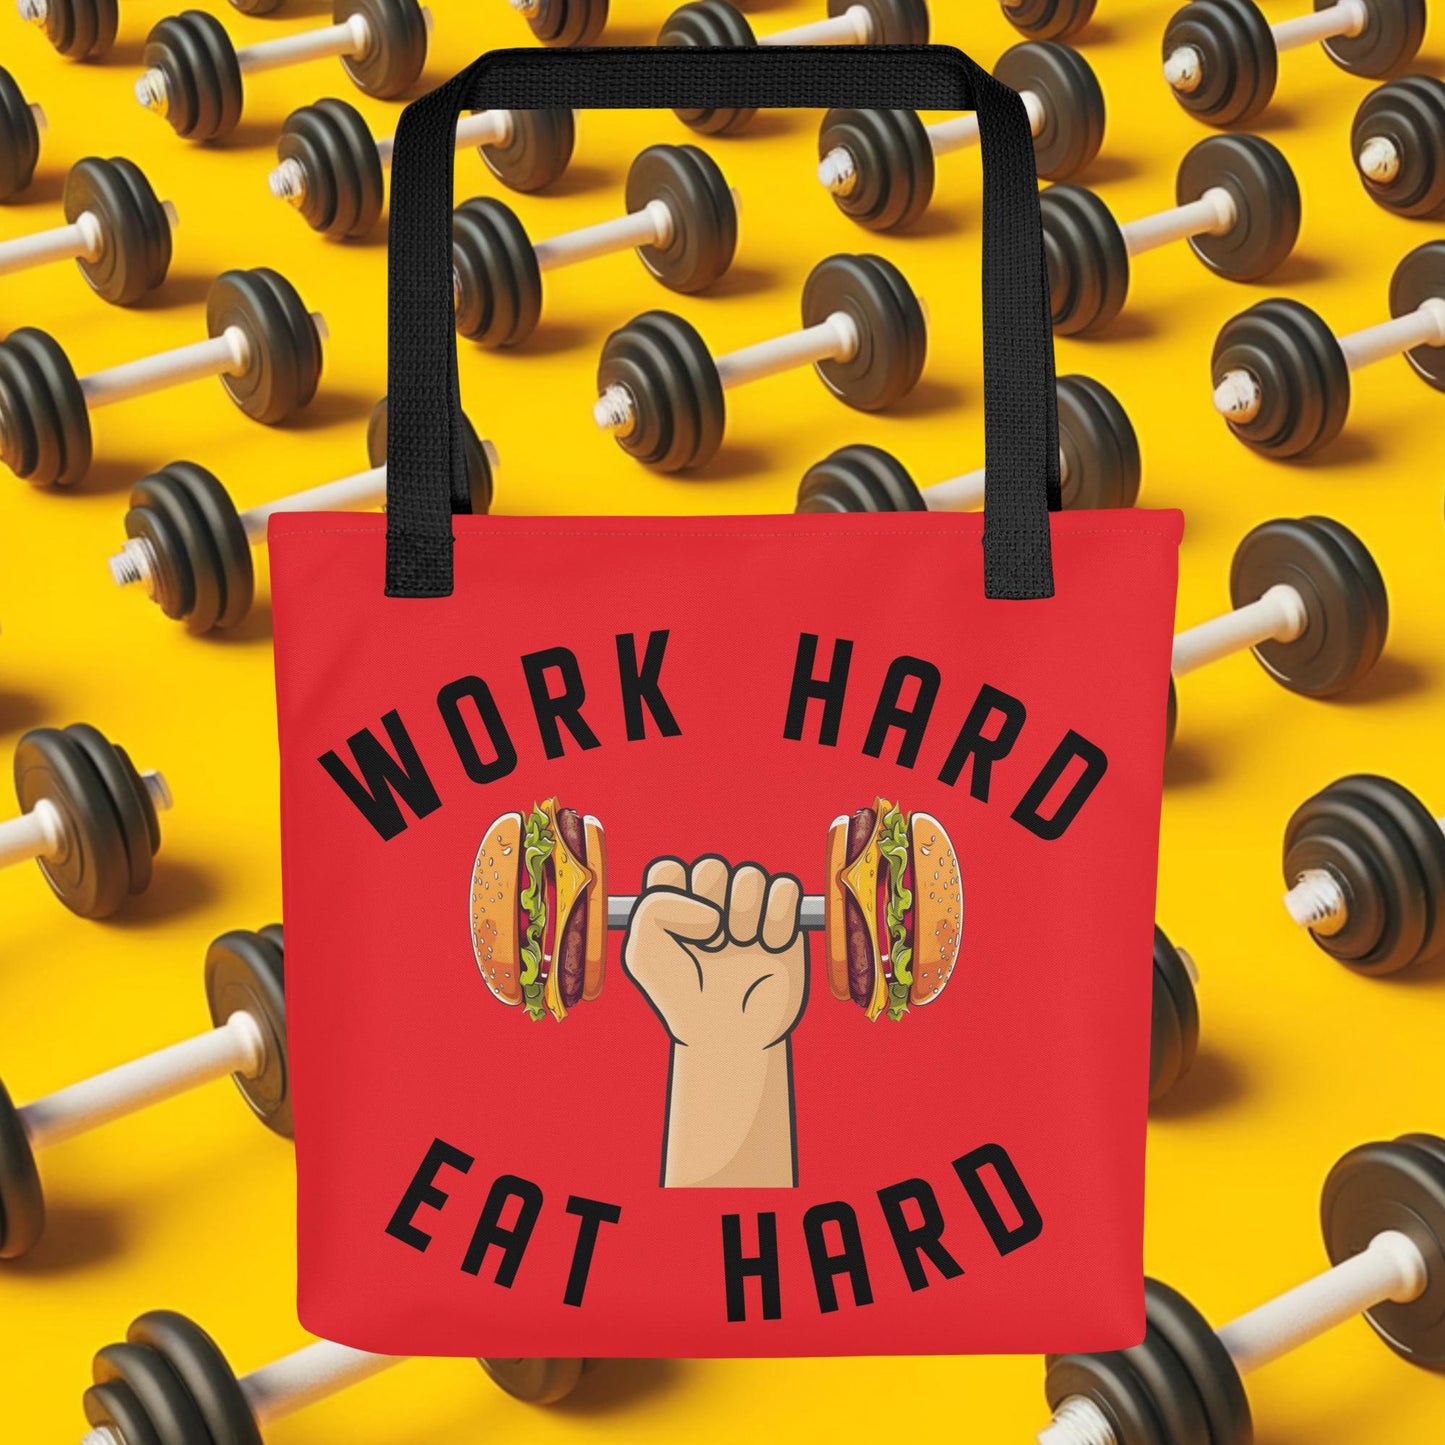 Work Hard Eat Hard Funny Bulk Diet Gym Workout Fitness Bodybuilding Tote bag Next Cult Brand